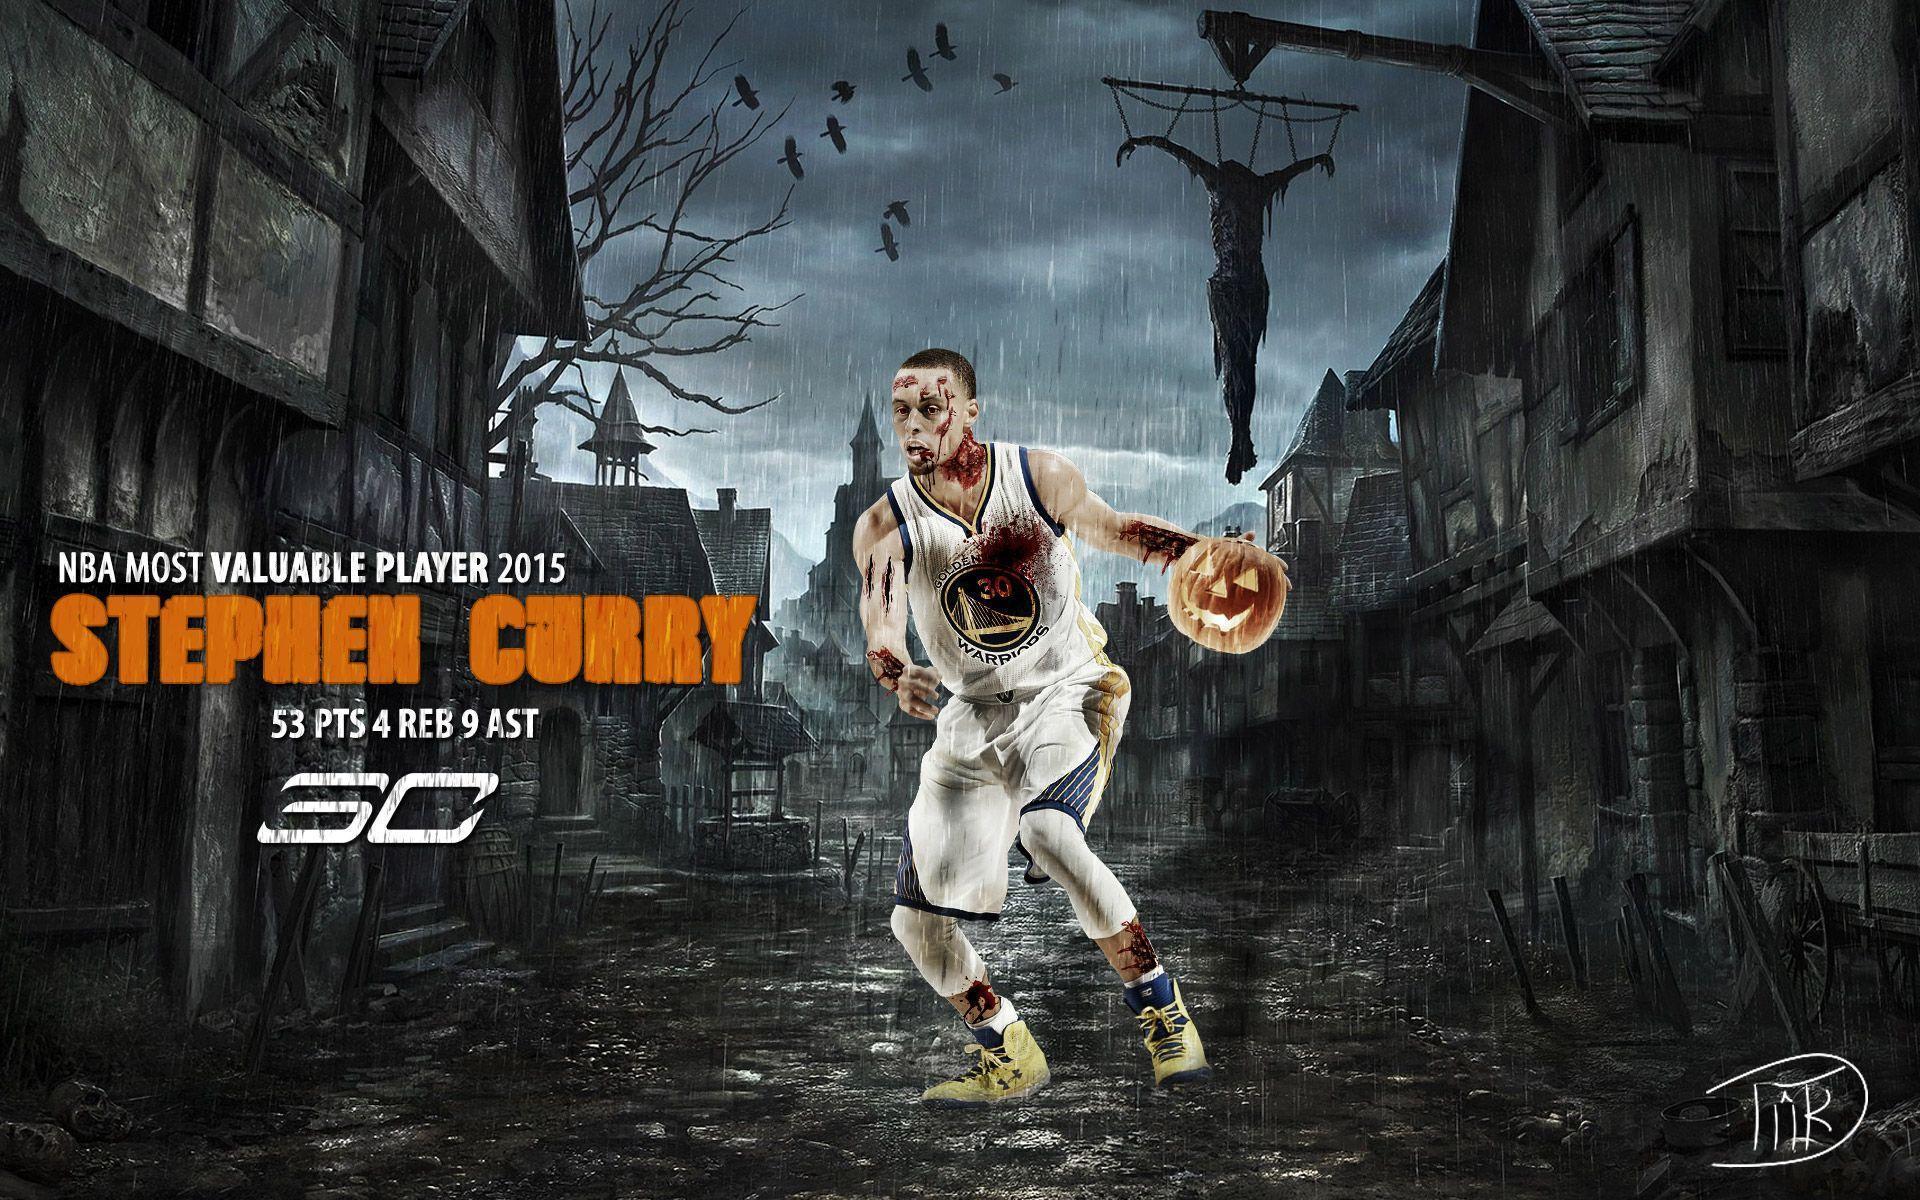 Stephen Curry Wallpaper. Basketball Wallpaper at